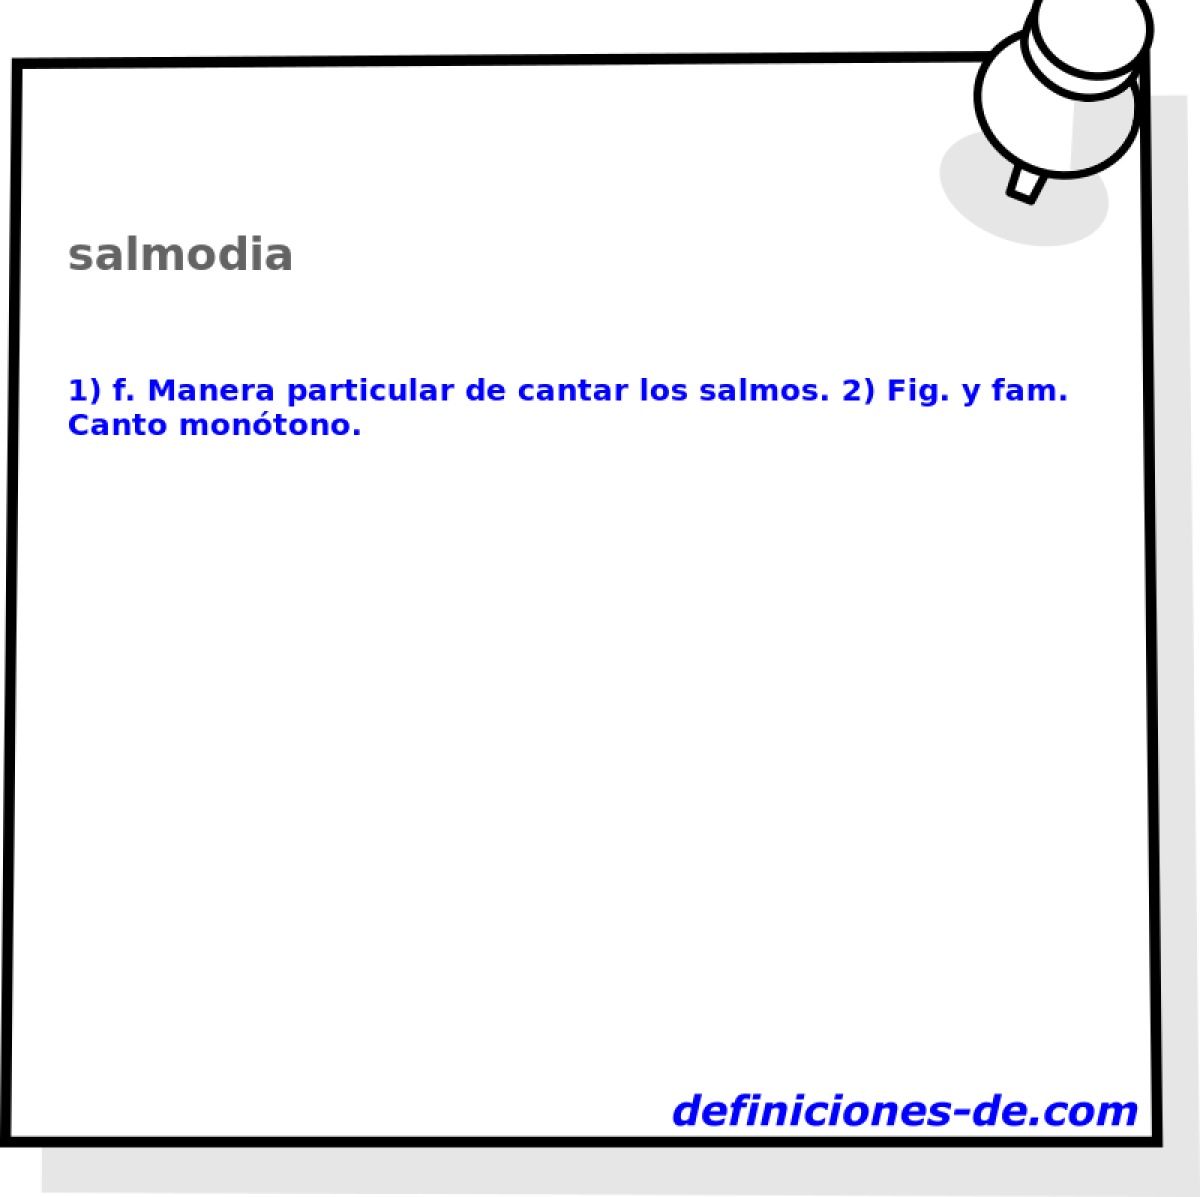 salmodia 